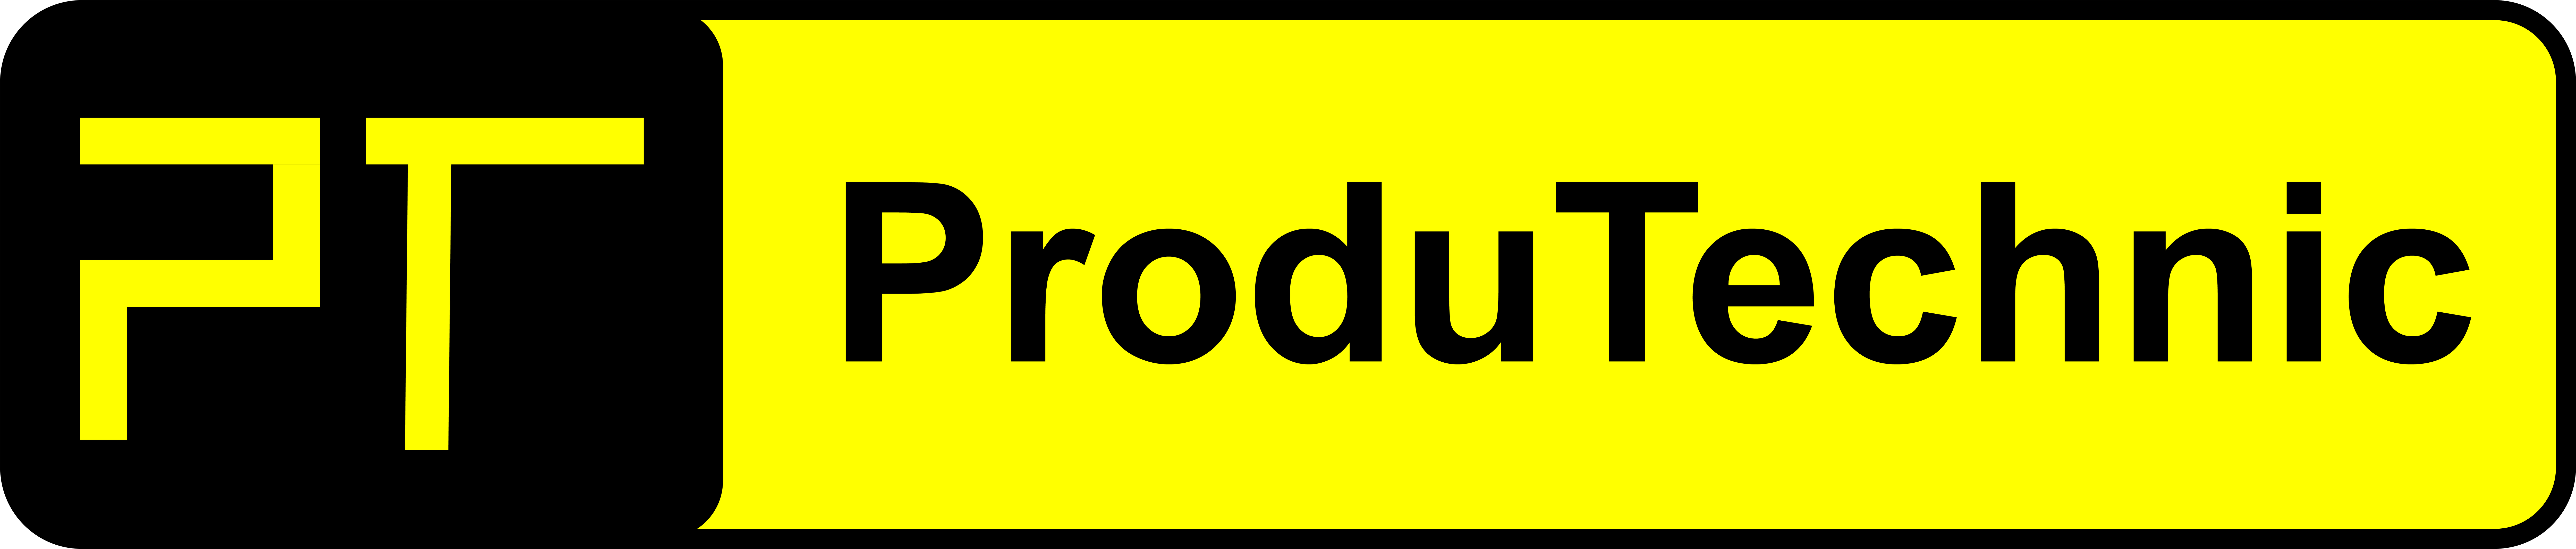 ProduTechnic.com